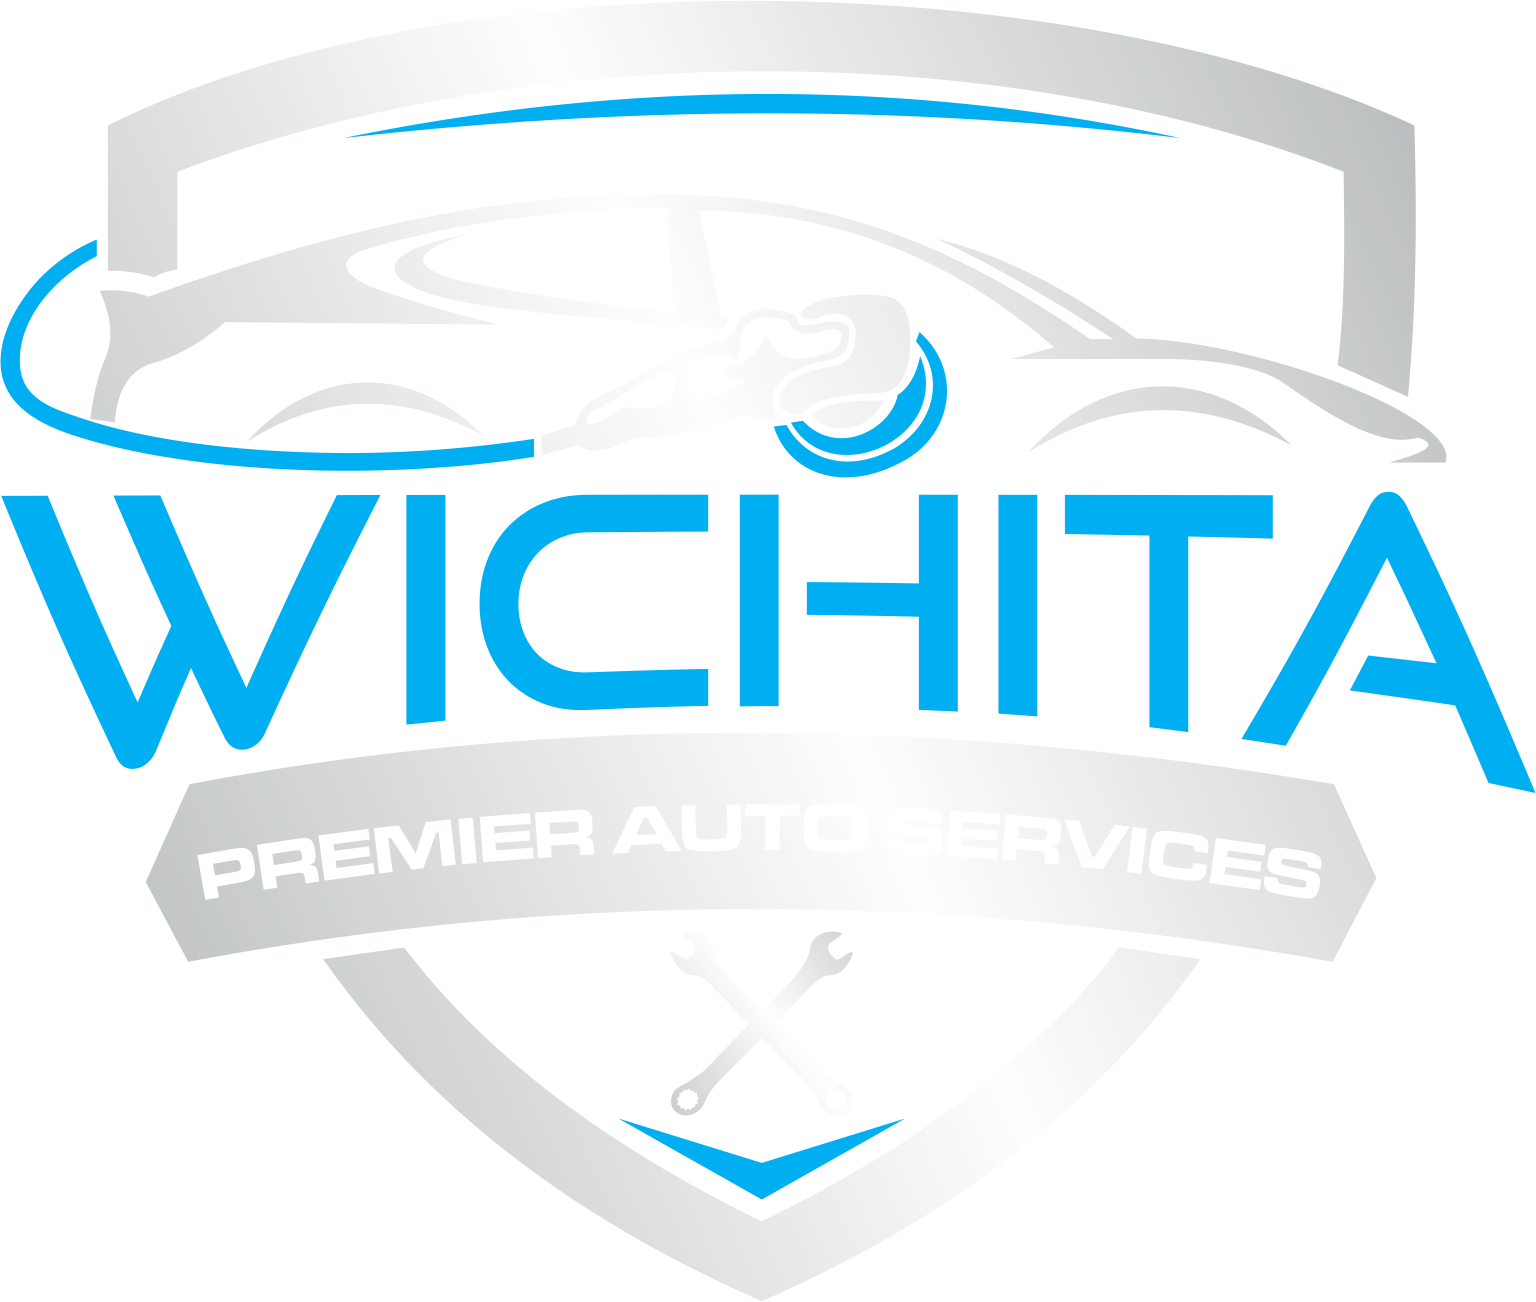 Professional Auto Detailing Services in Wichita, KS